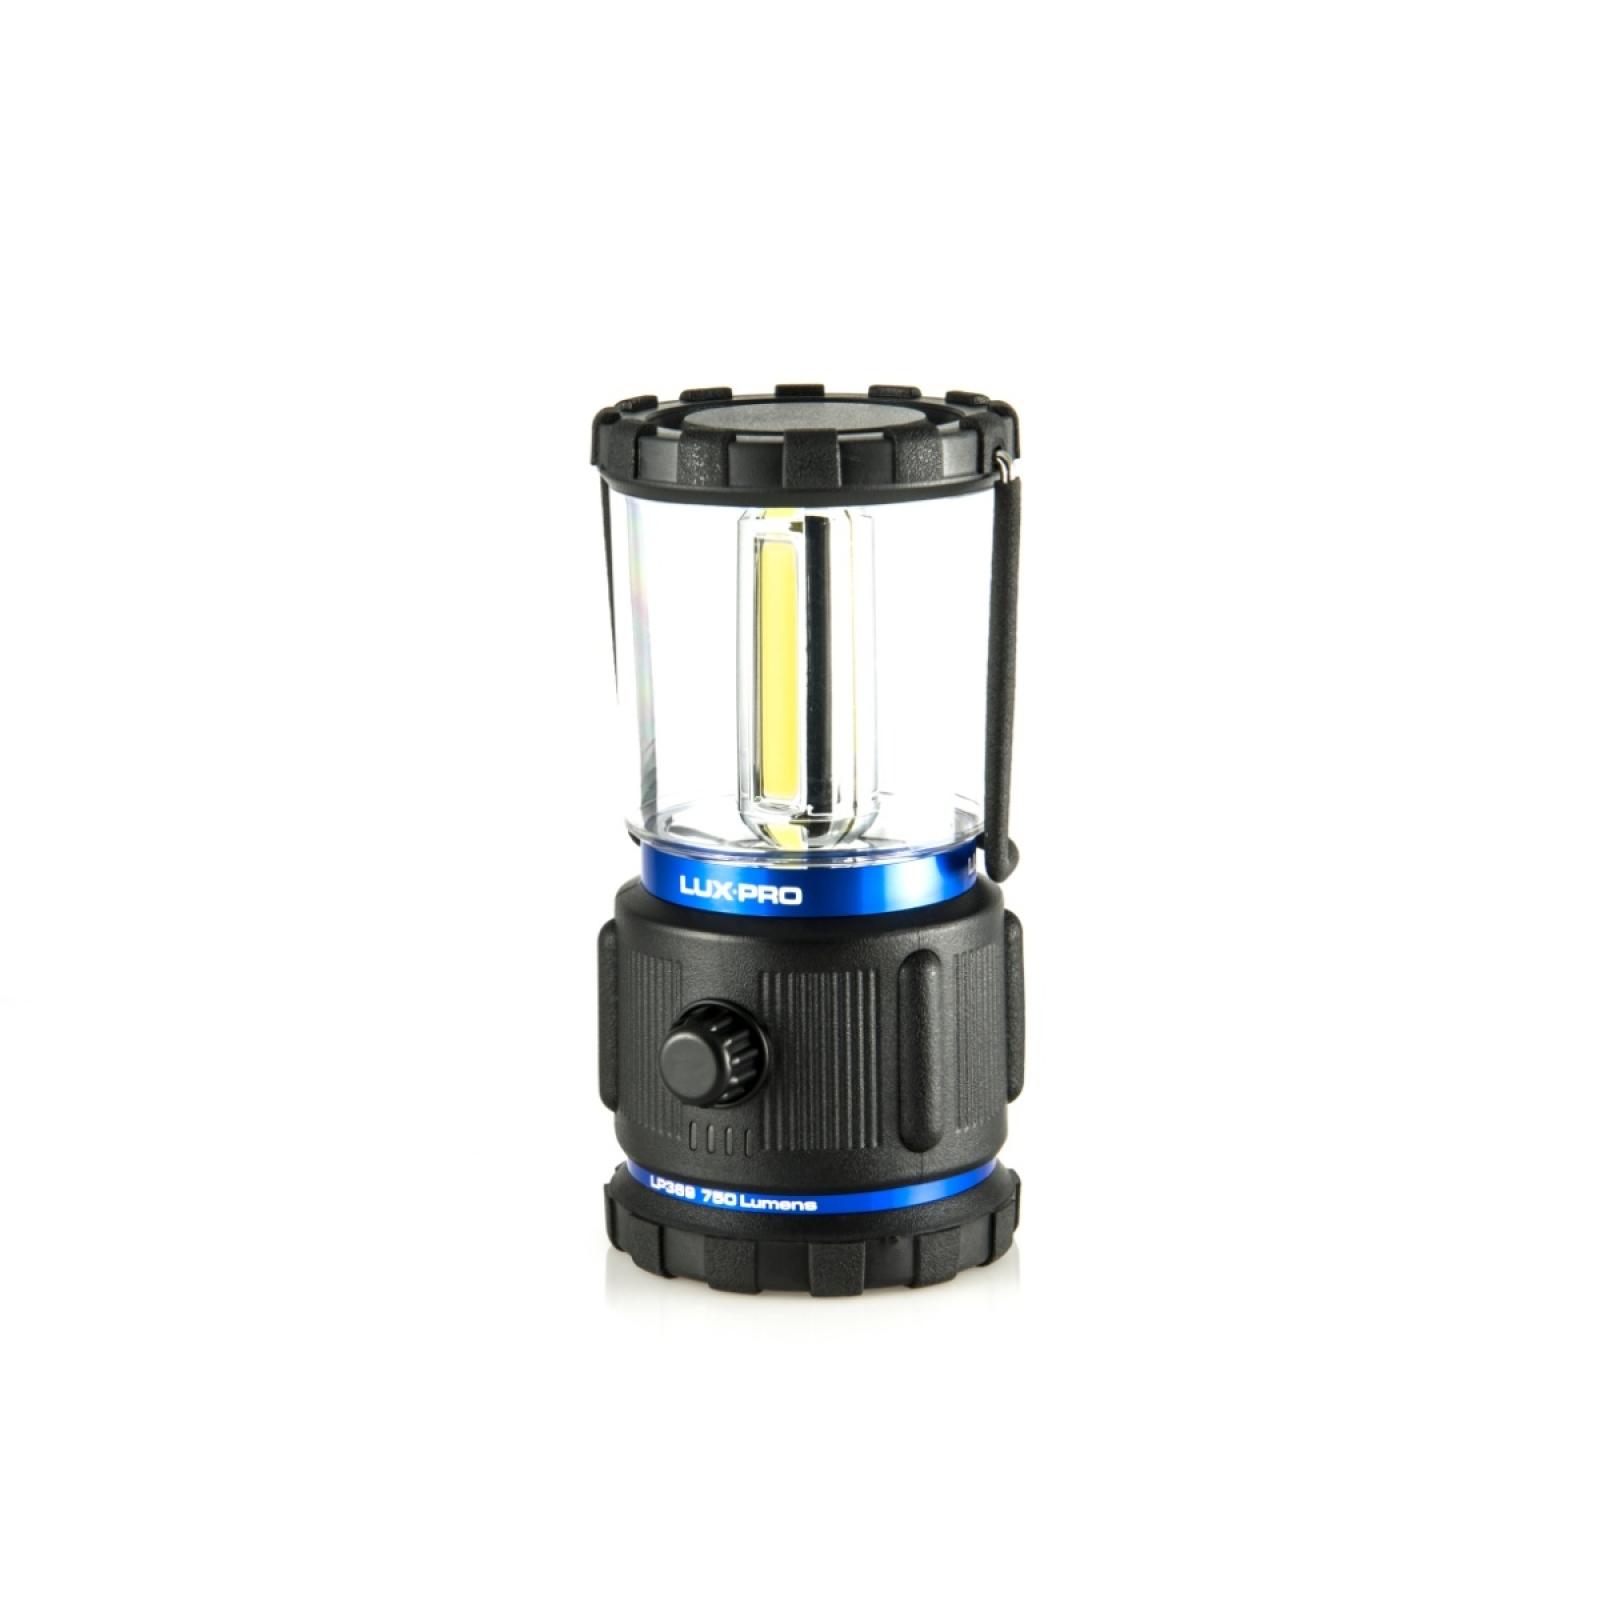 Luxpro 750 Lumen Broadbeam LED Lantern 